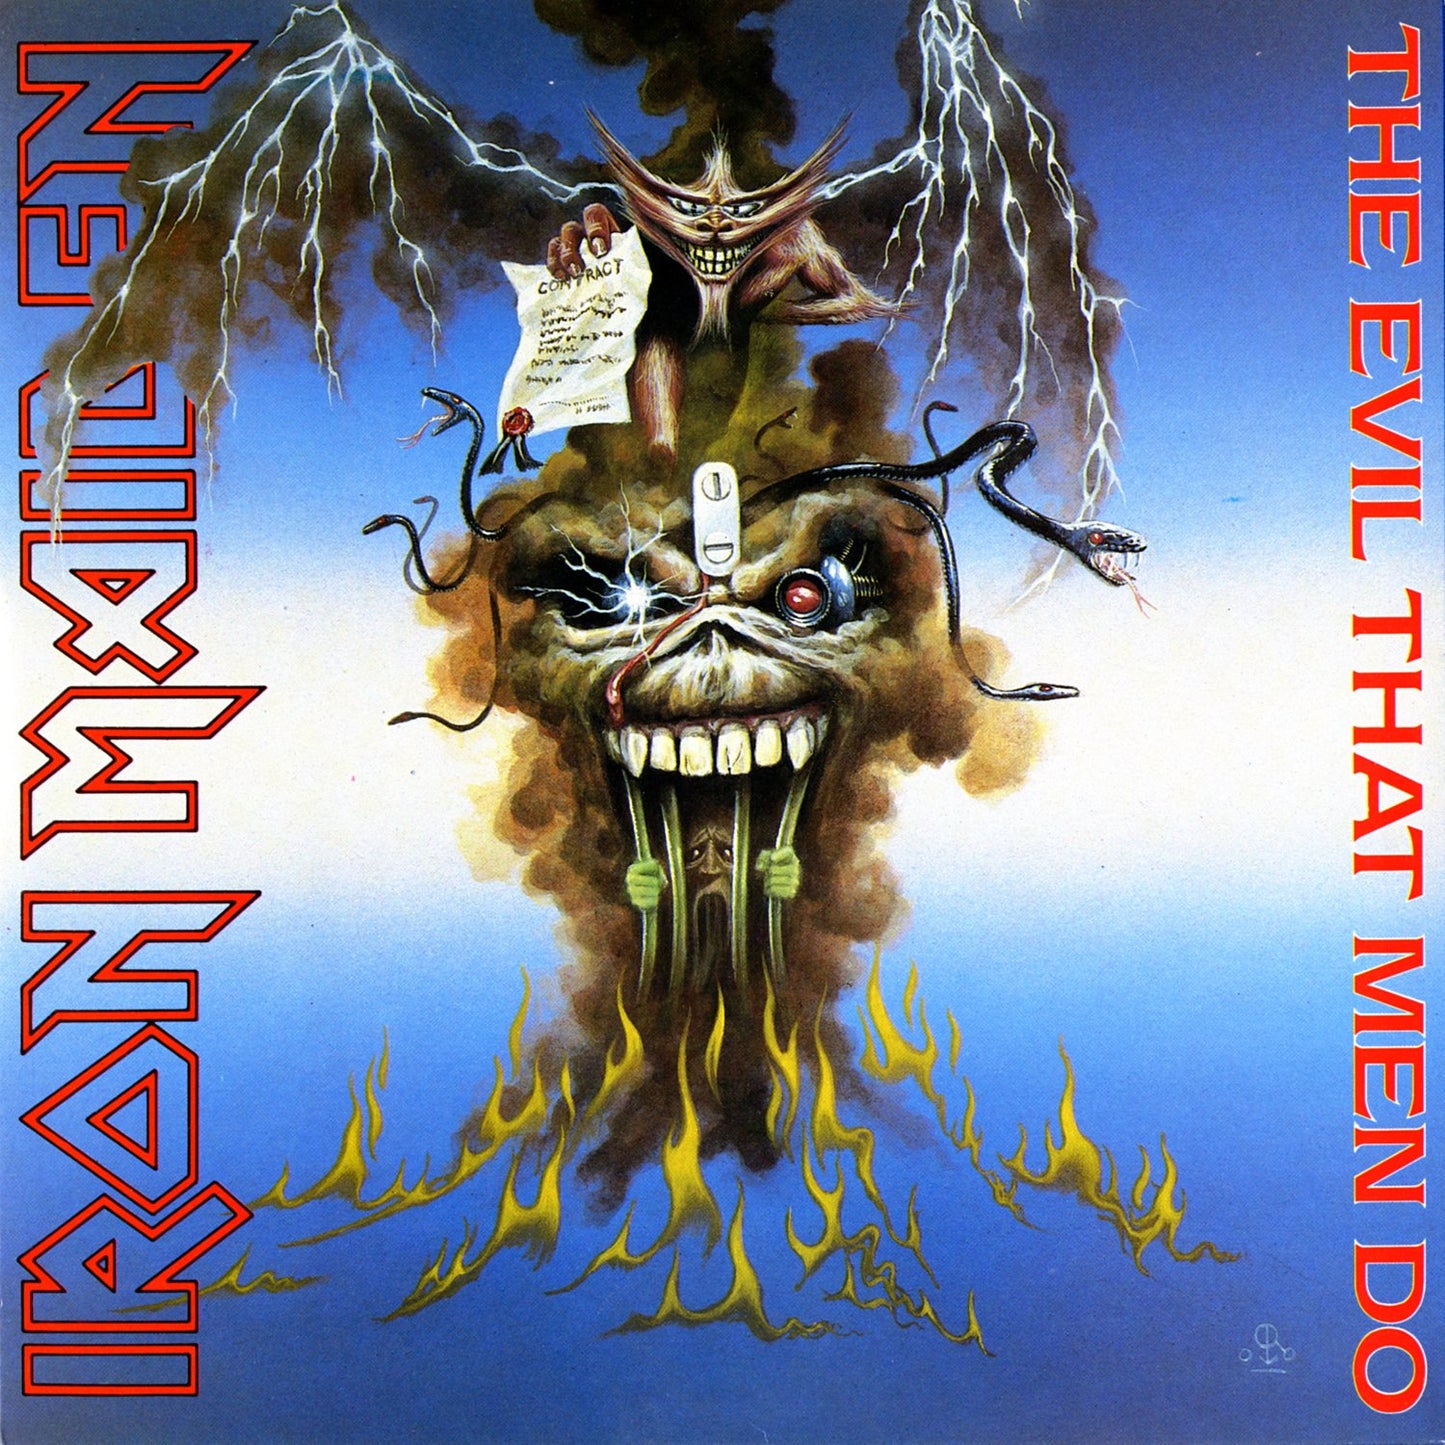 Iron Maiden "The Evil That Men Do" 7"